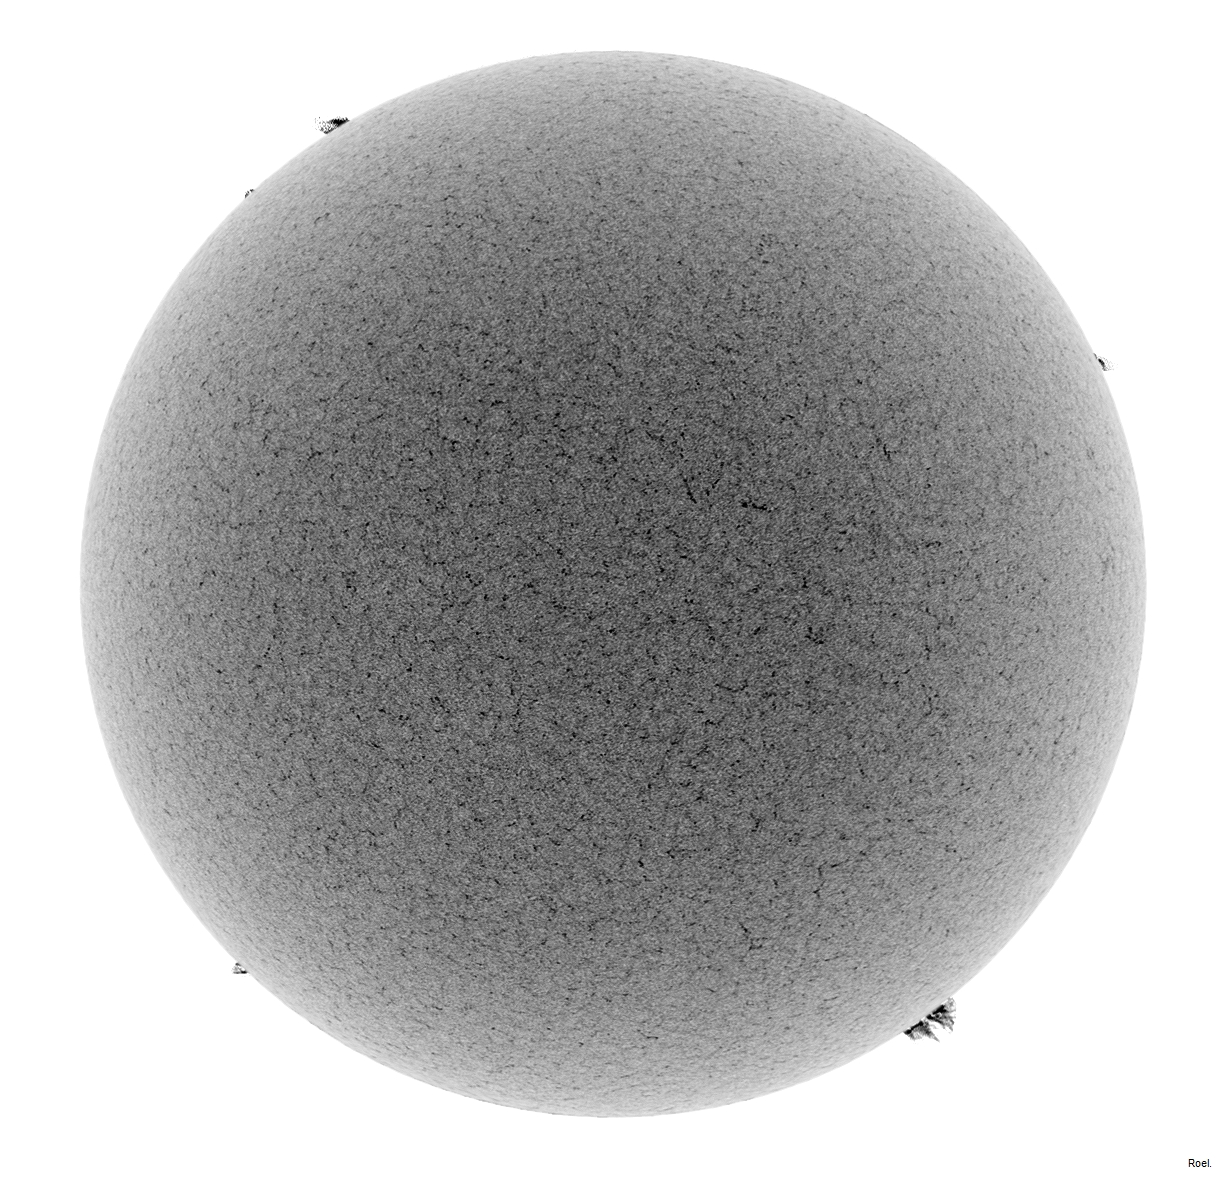 Sol del 20 de mayo del 2019-Meade-CaK-PSTmod-1neg.jpg